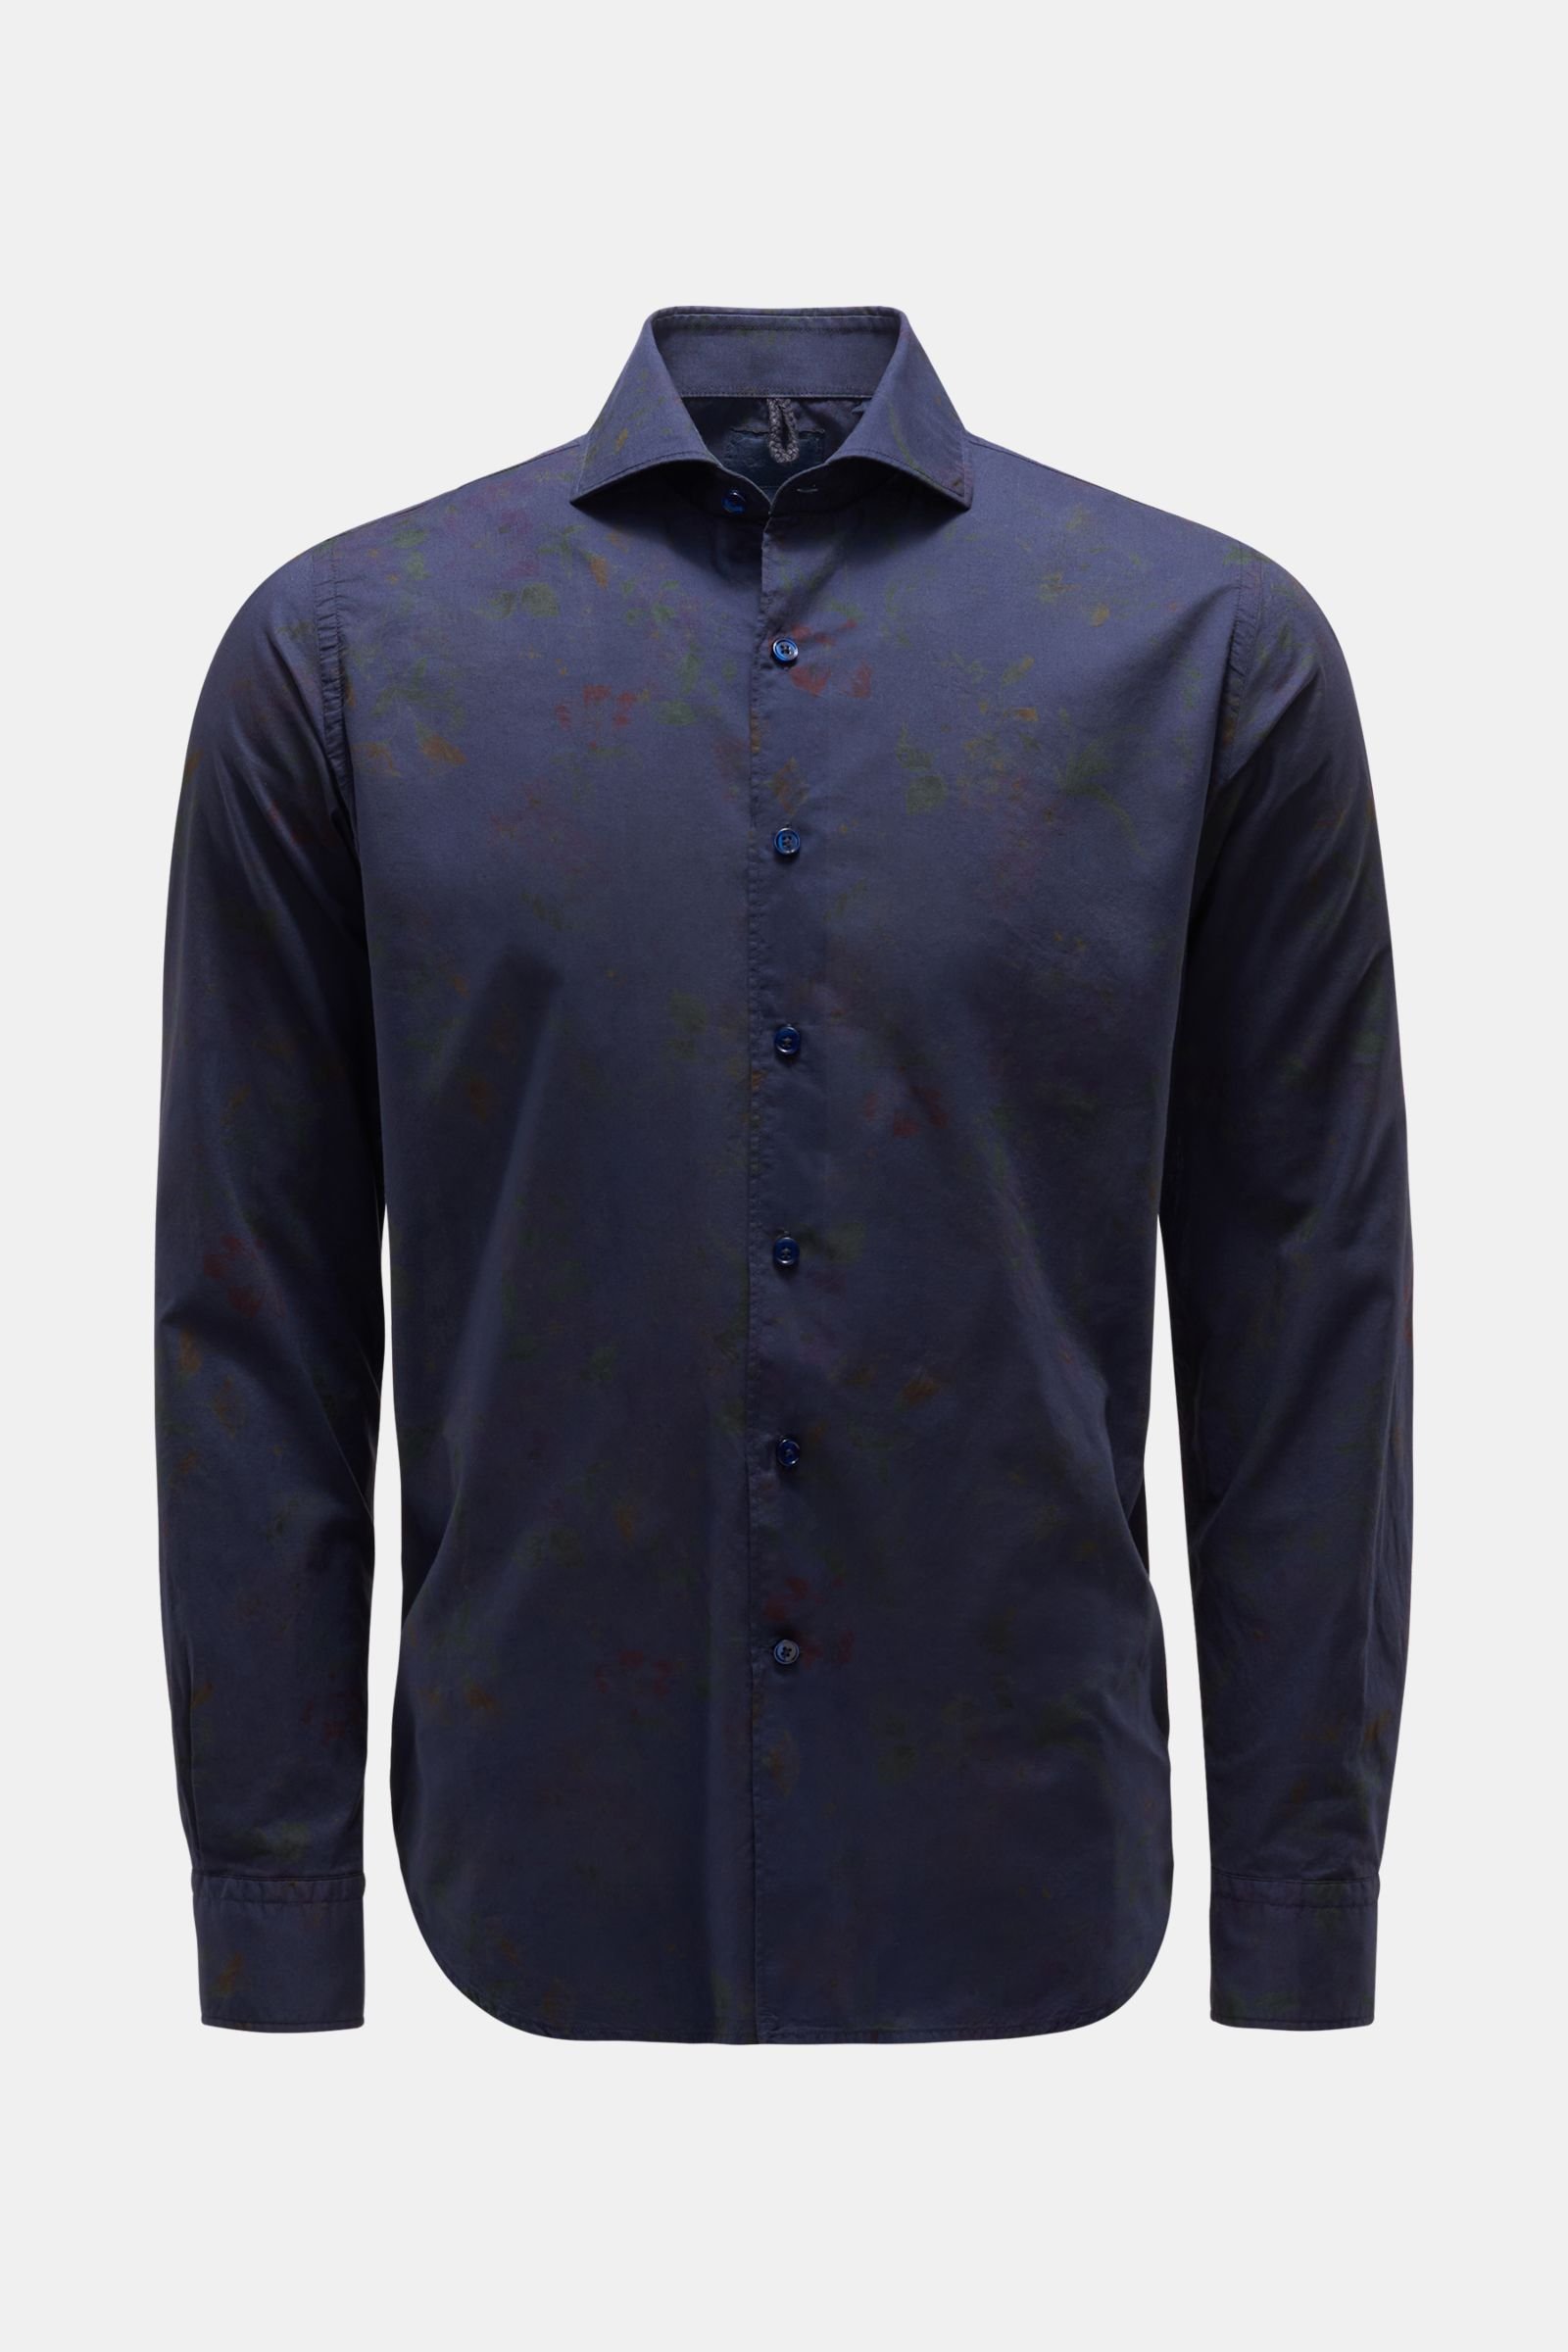 Casual shirt shark collar navy patterned